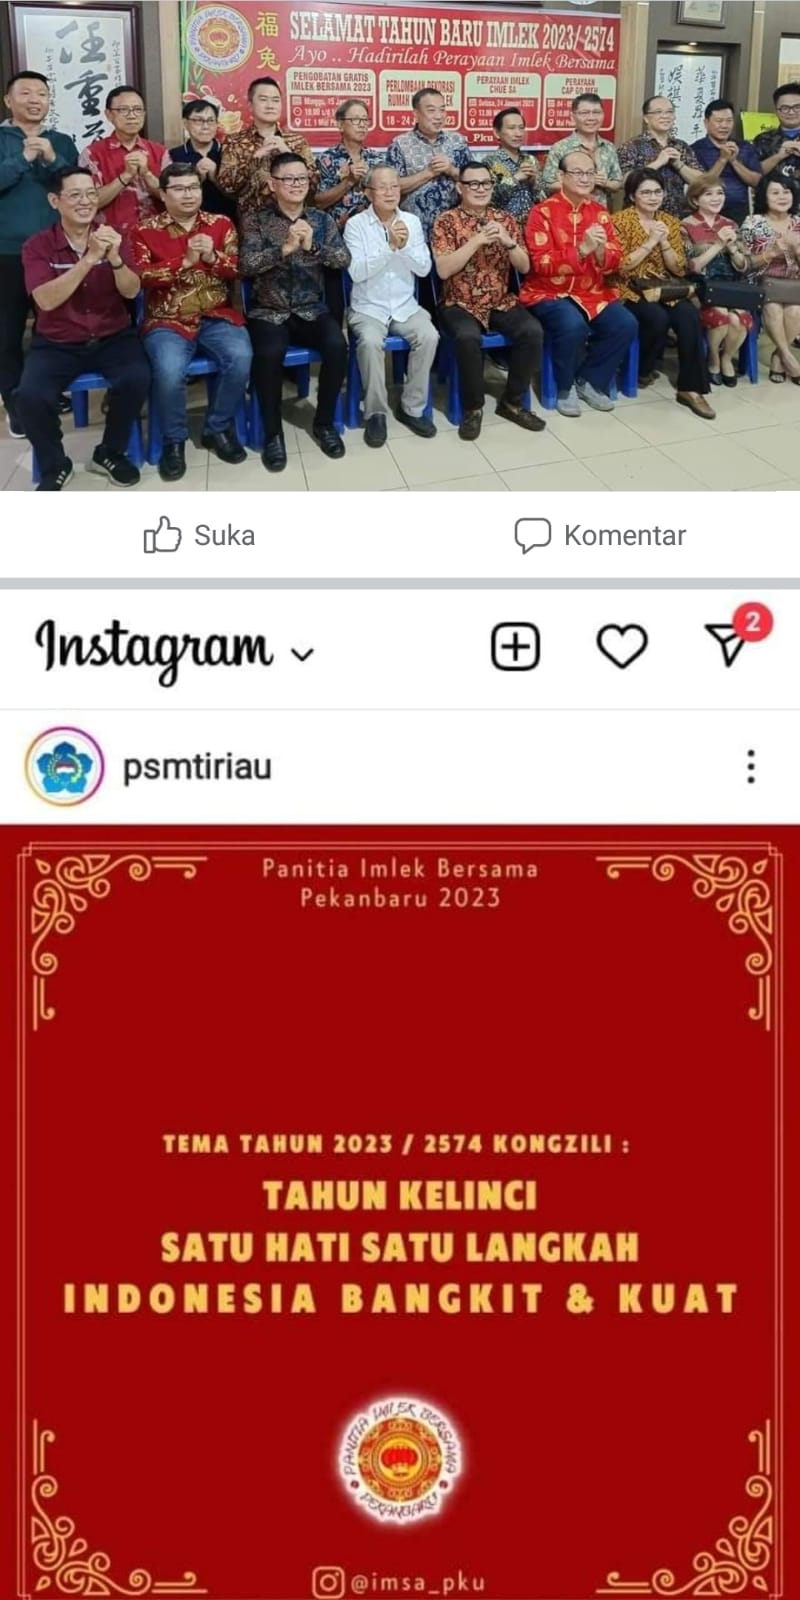 Rayakan Imlek 2023/2574 Kongzili , Inilah Persiapan Acara Dari PSMTI Riau